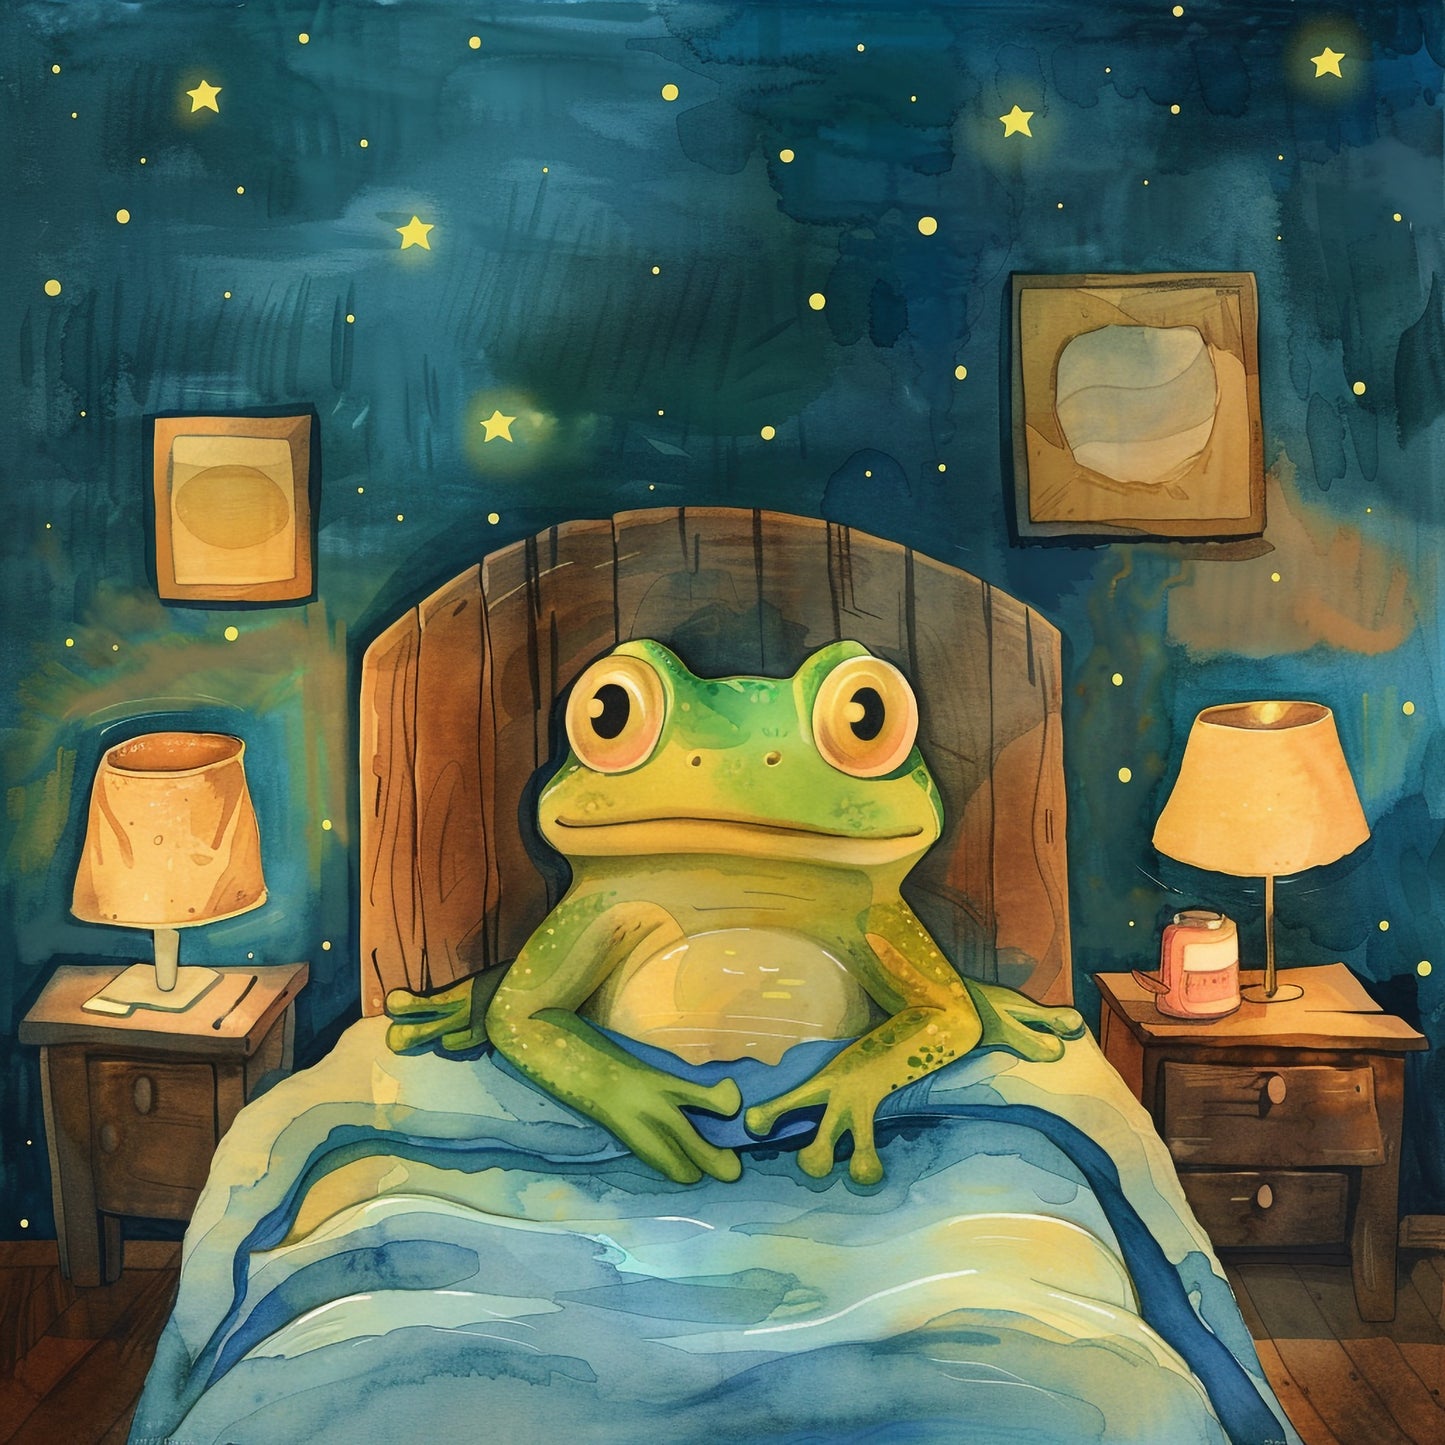 Charming Baby Frog Enjoying a Cozy Bedroom Night